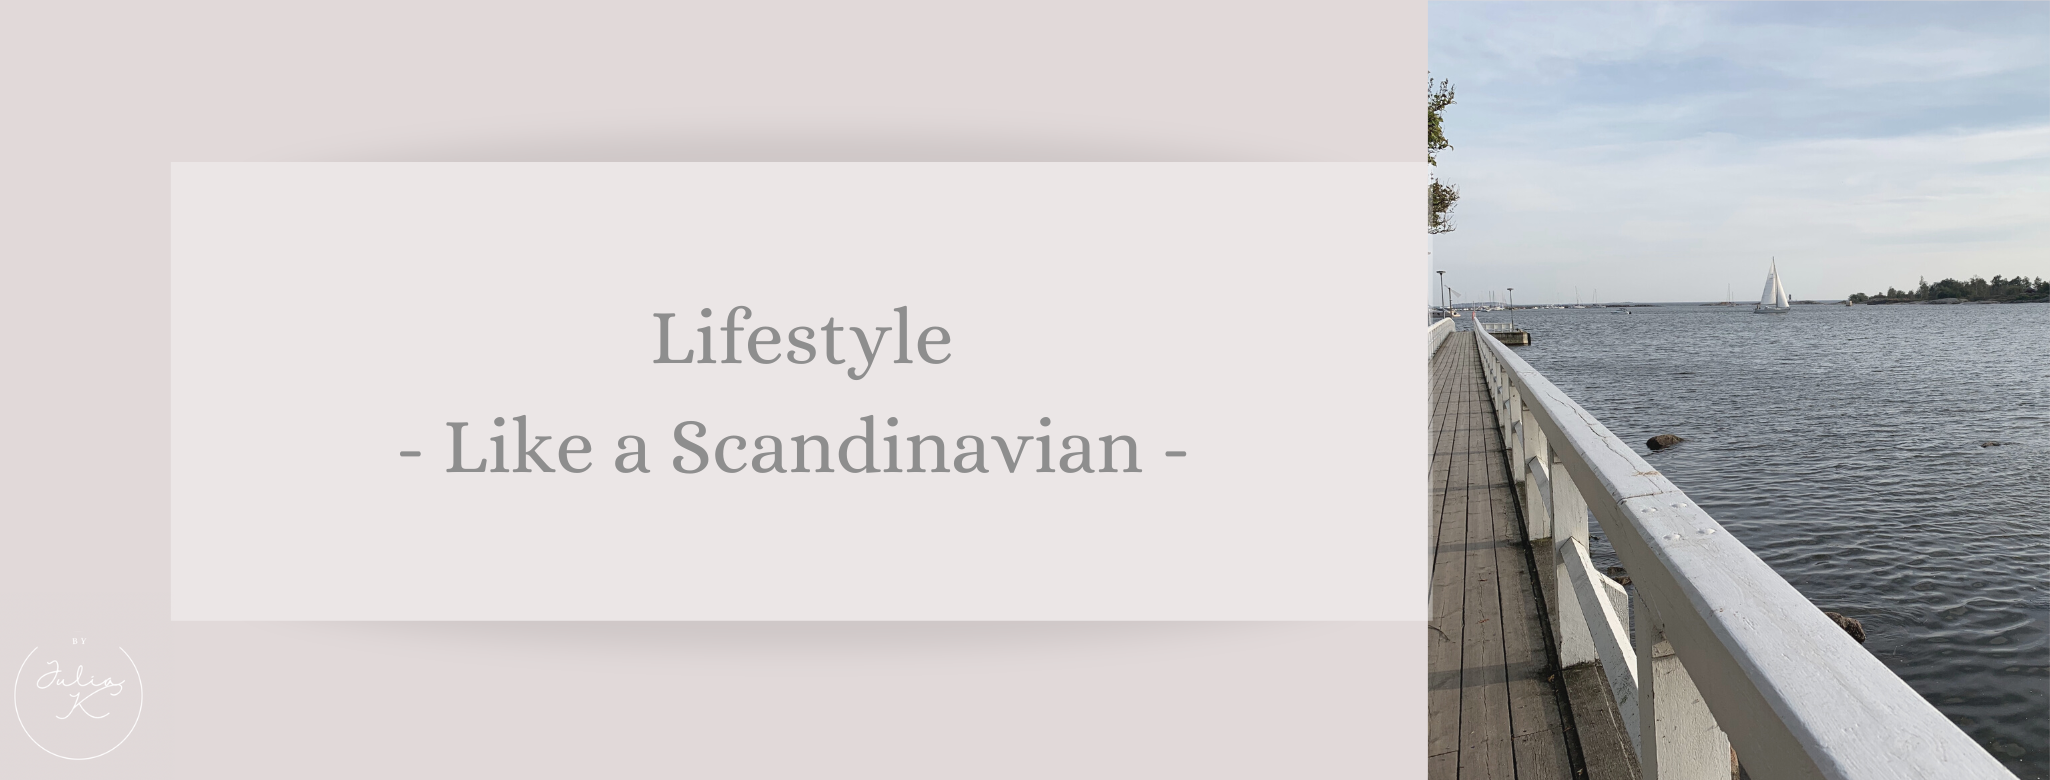 Lifestyle: Living like Scandinavians